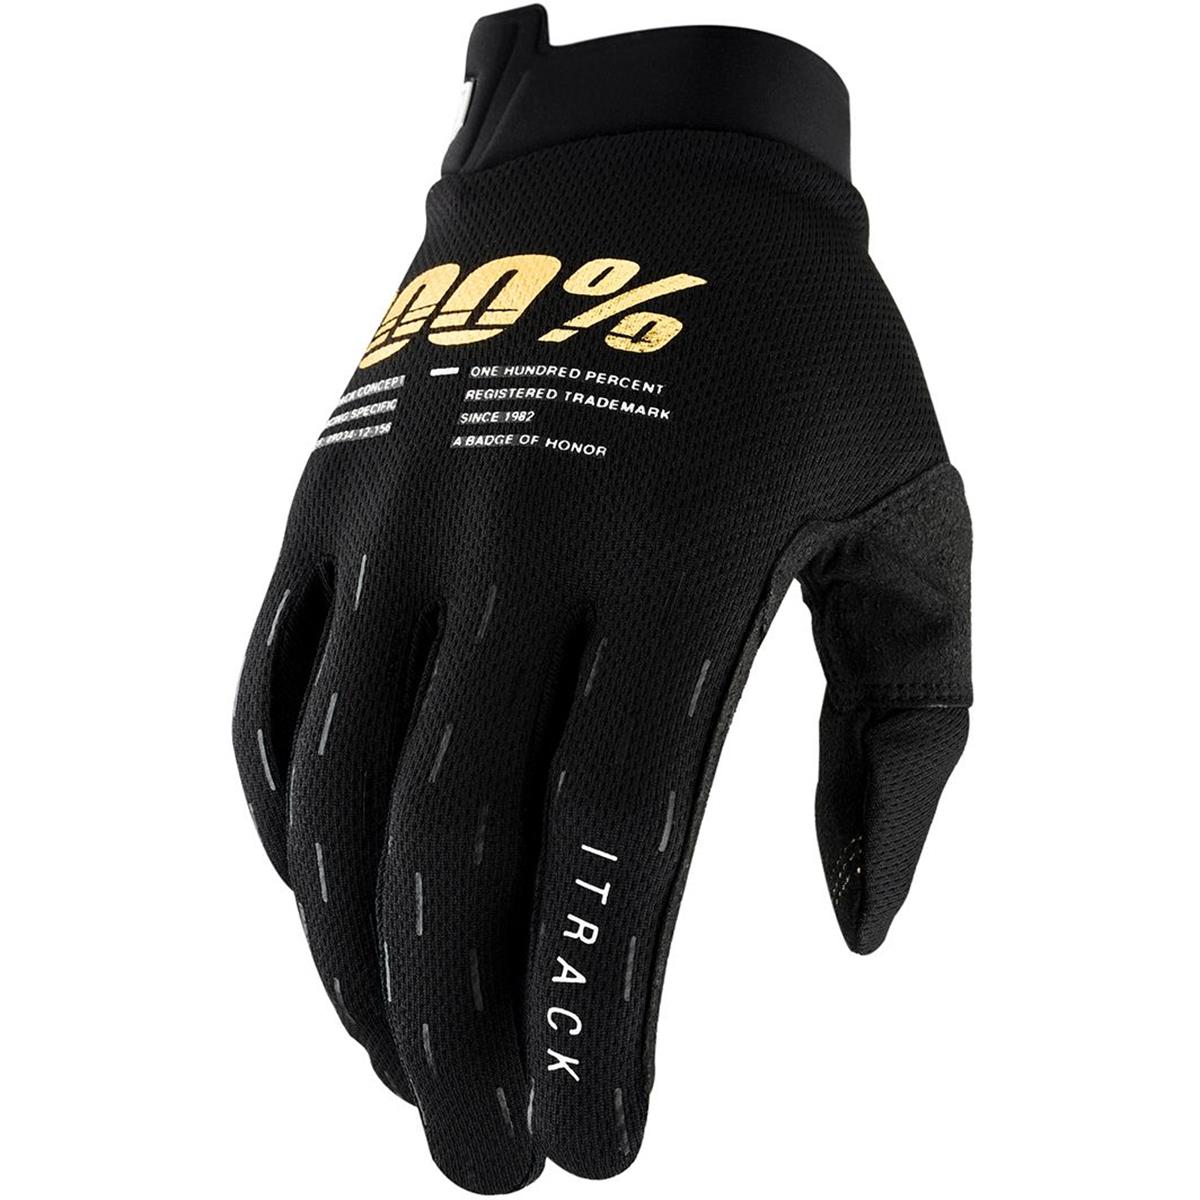 https://www.maciag-offroad.de/shop/artikelbilder/normal/141490/100-kids-handschuhe-kids-gloves-itrack-1.jpg